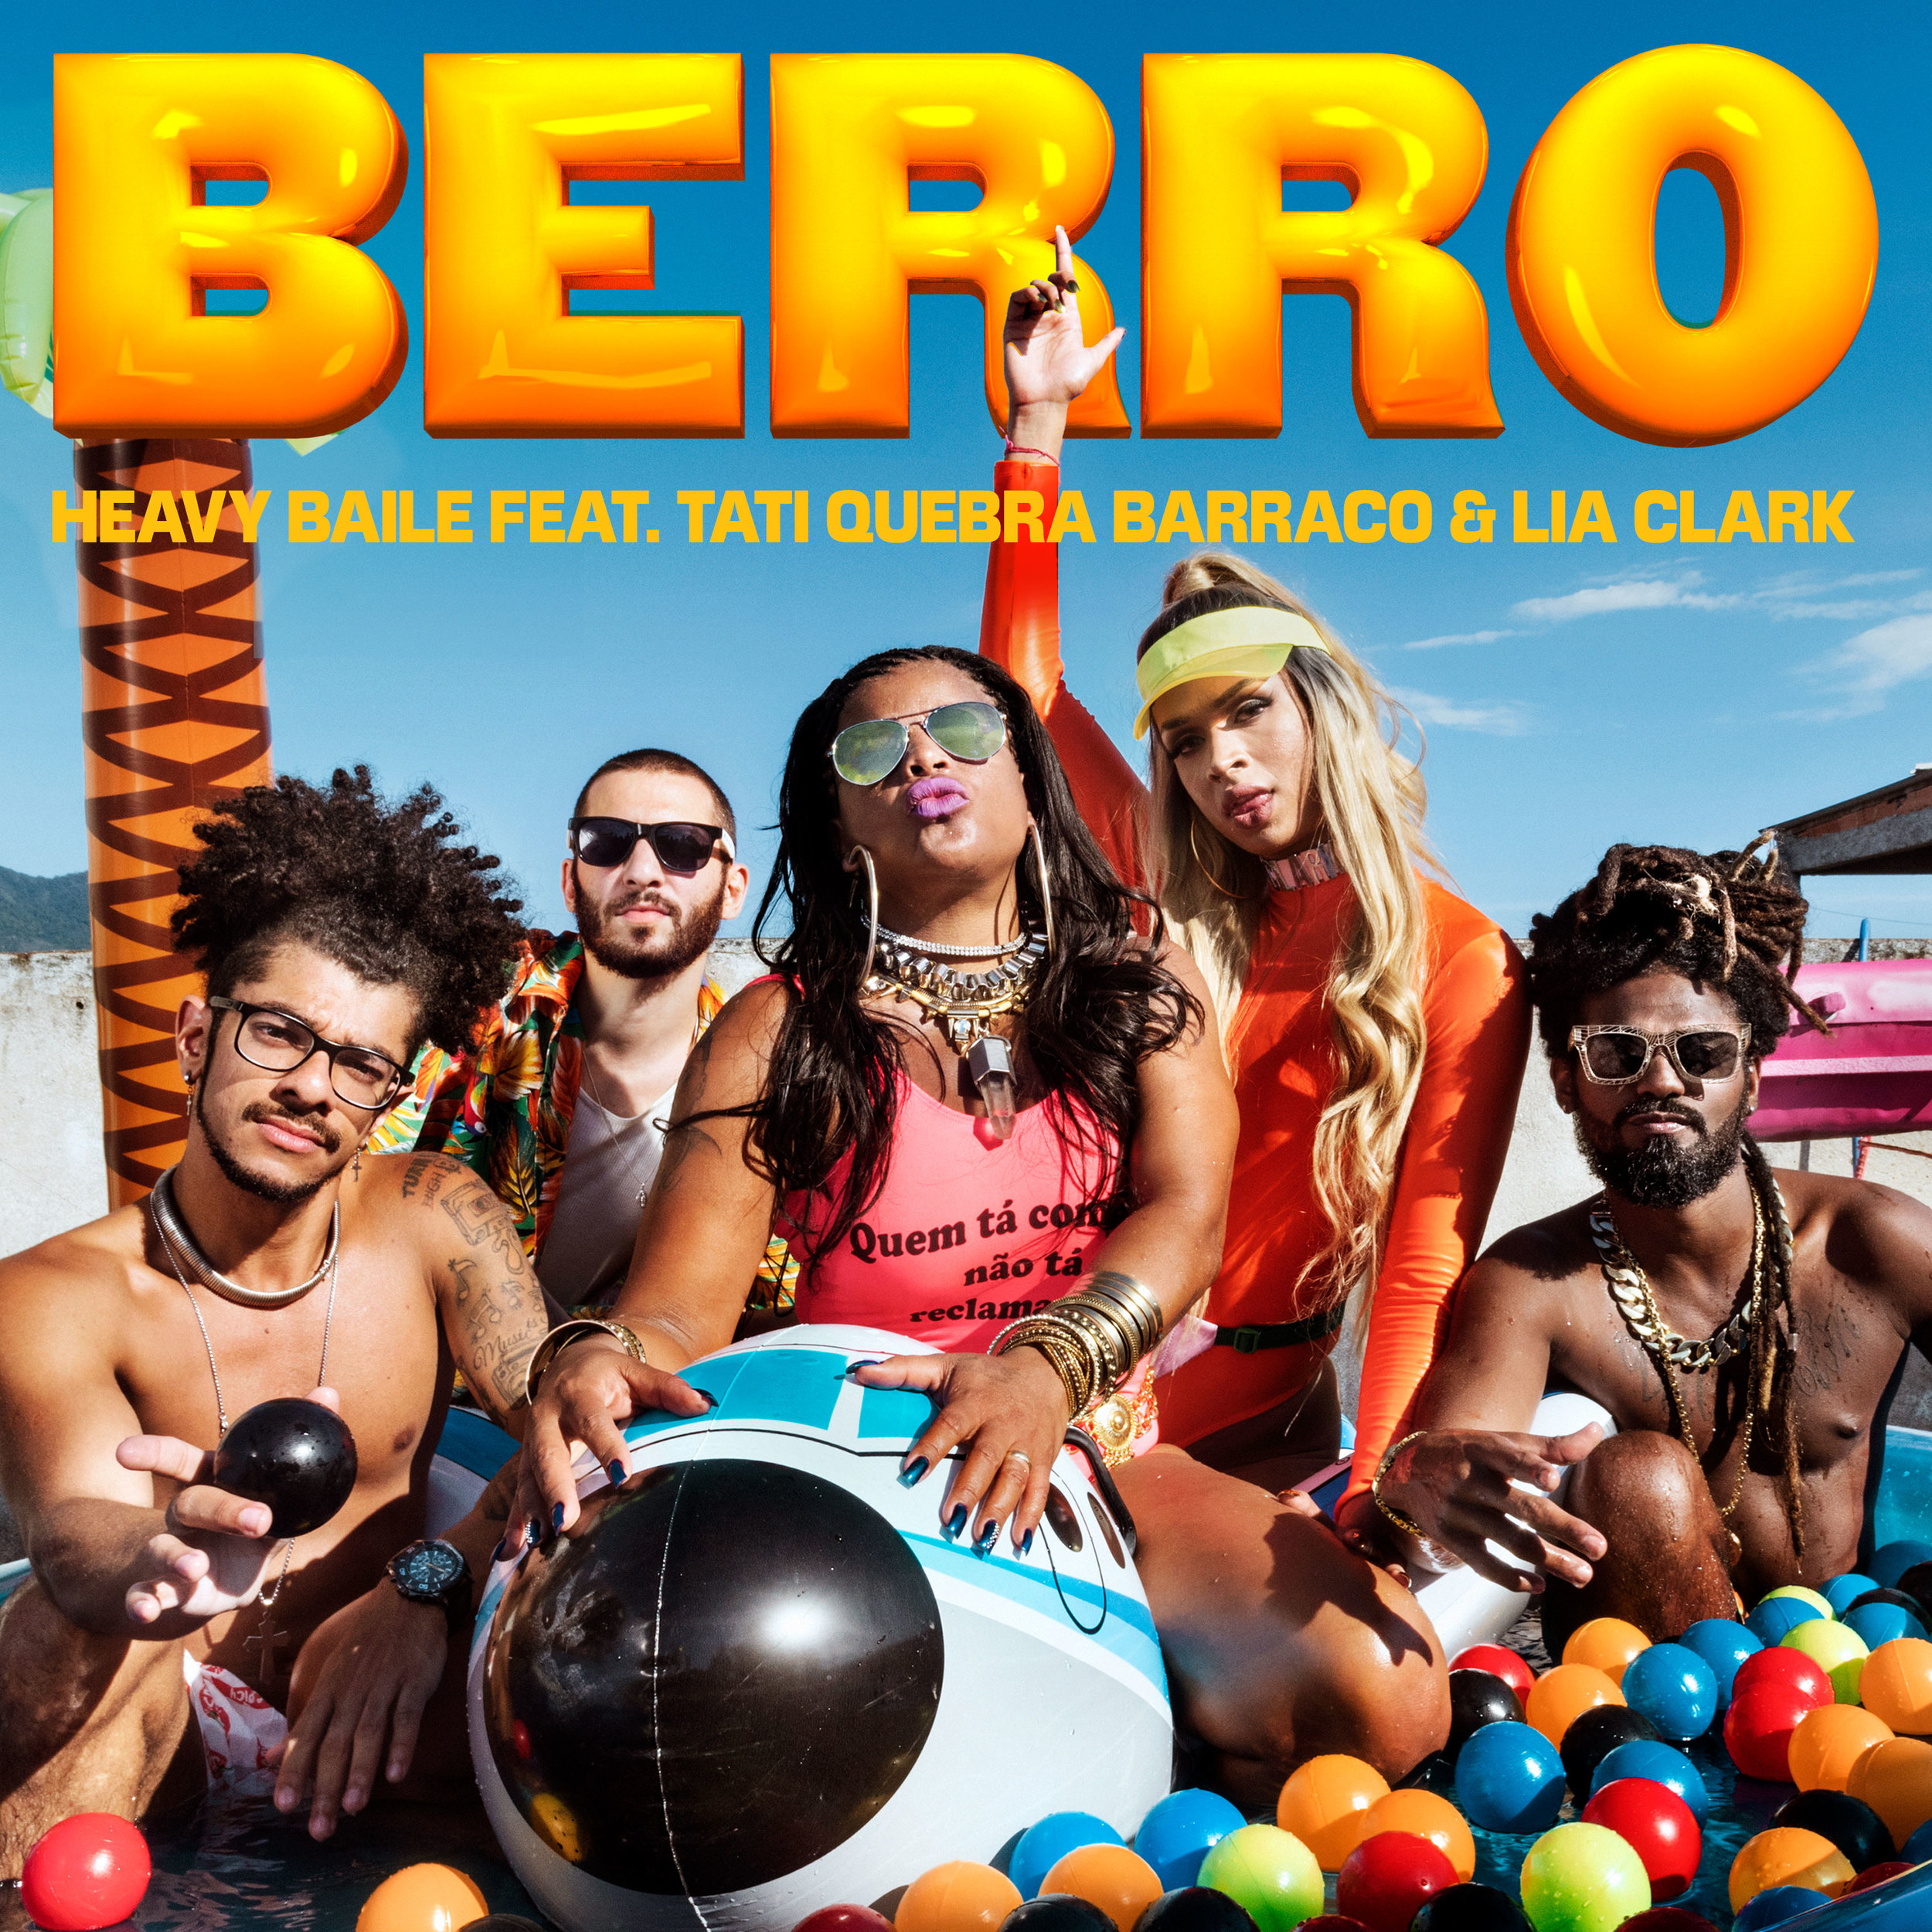  Cover for single BERRO by Heavy Baile feat Tati Quebra Barraco &amp; Lia Clark - shot in City of God Favela. Art by Relâmpago. 